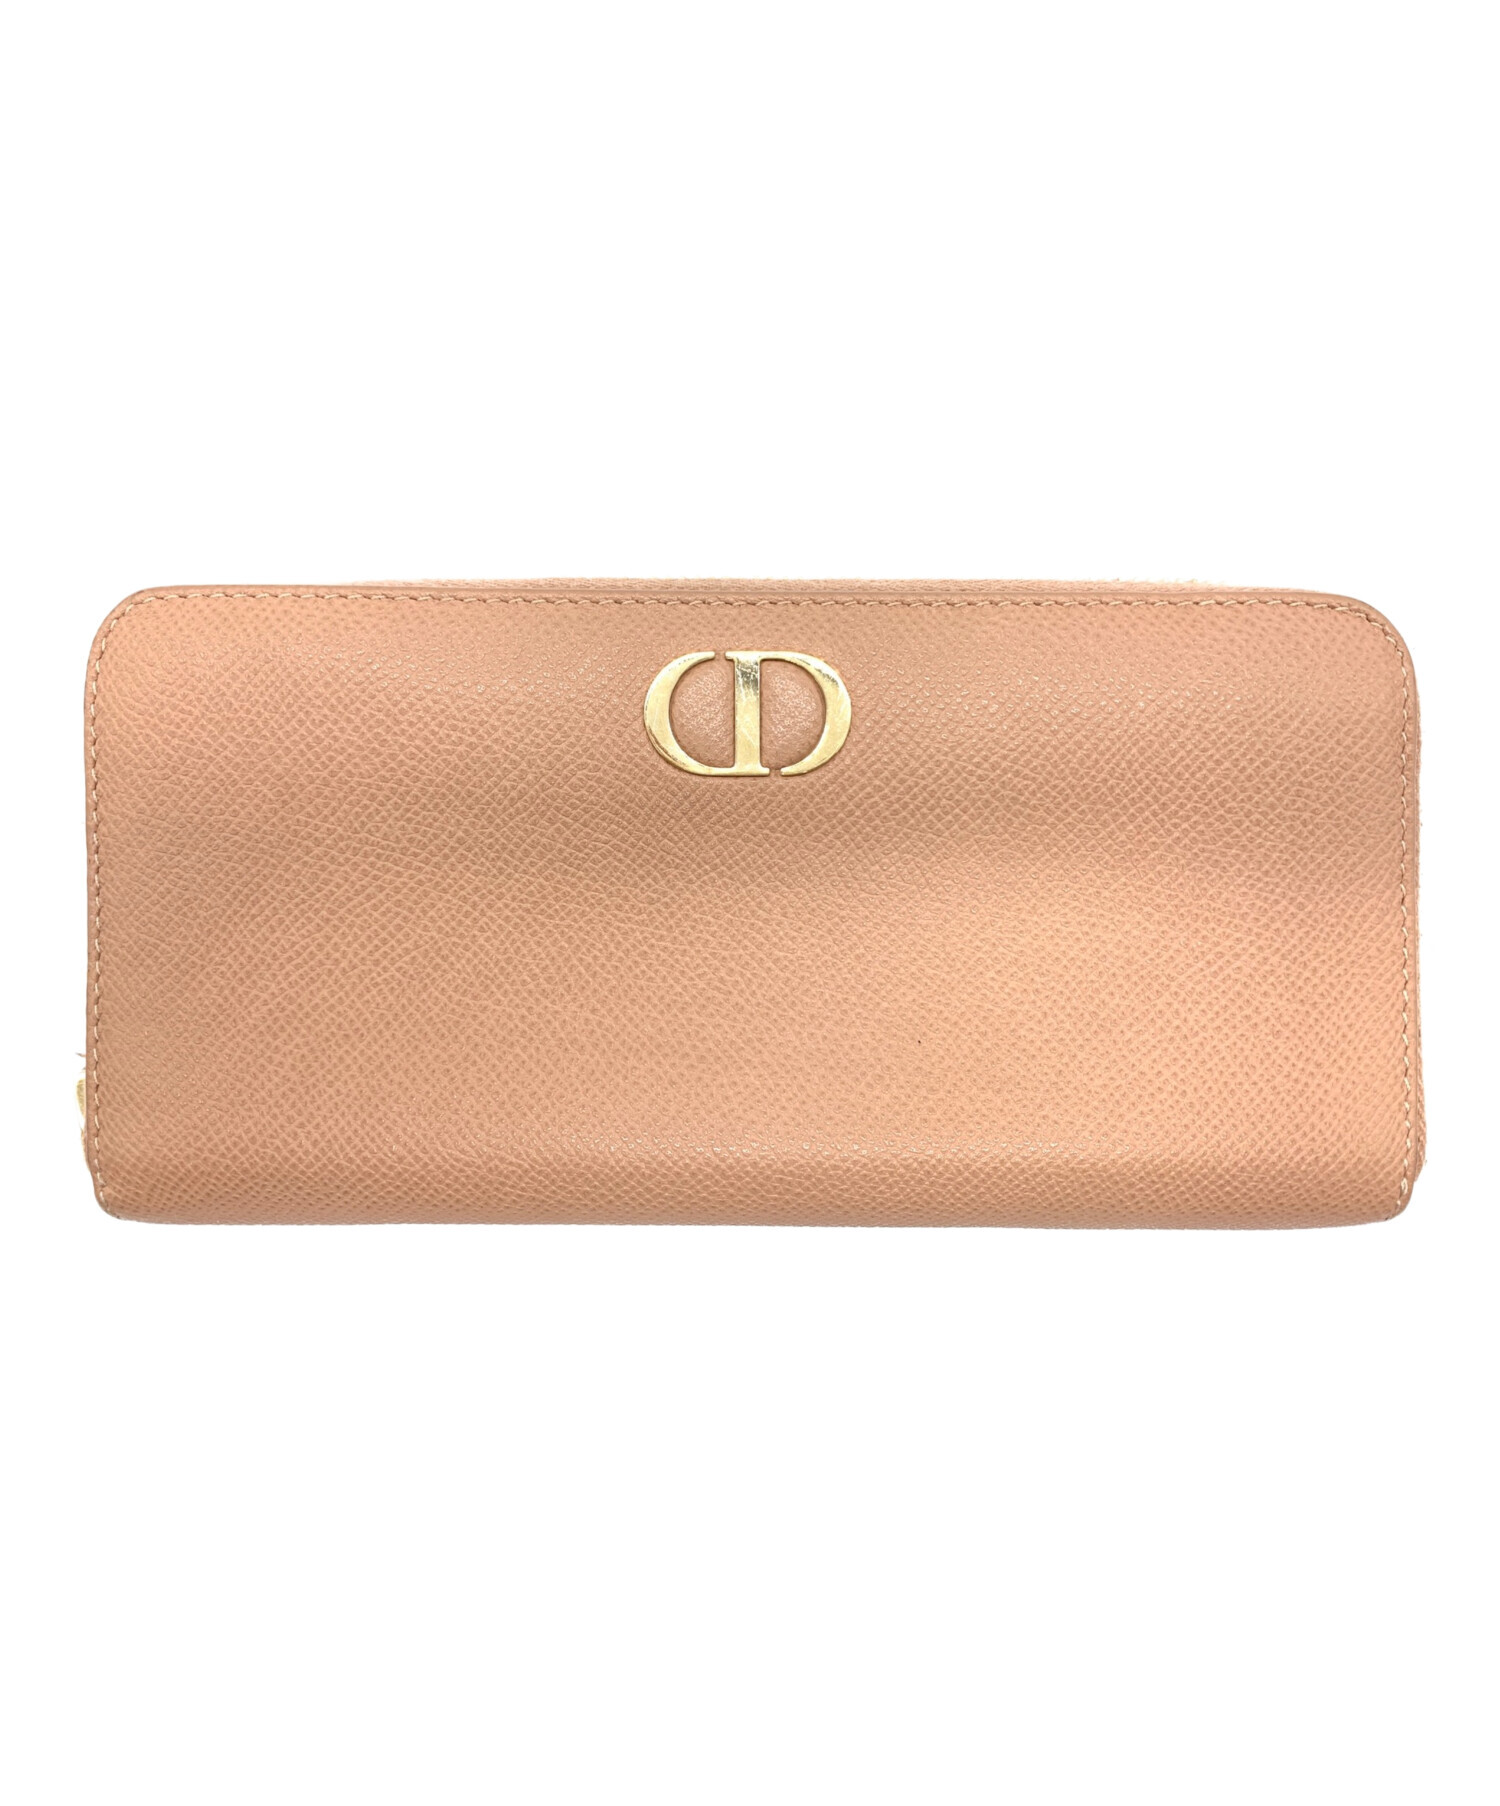 Christian Dior財布